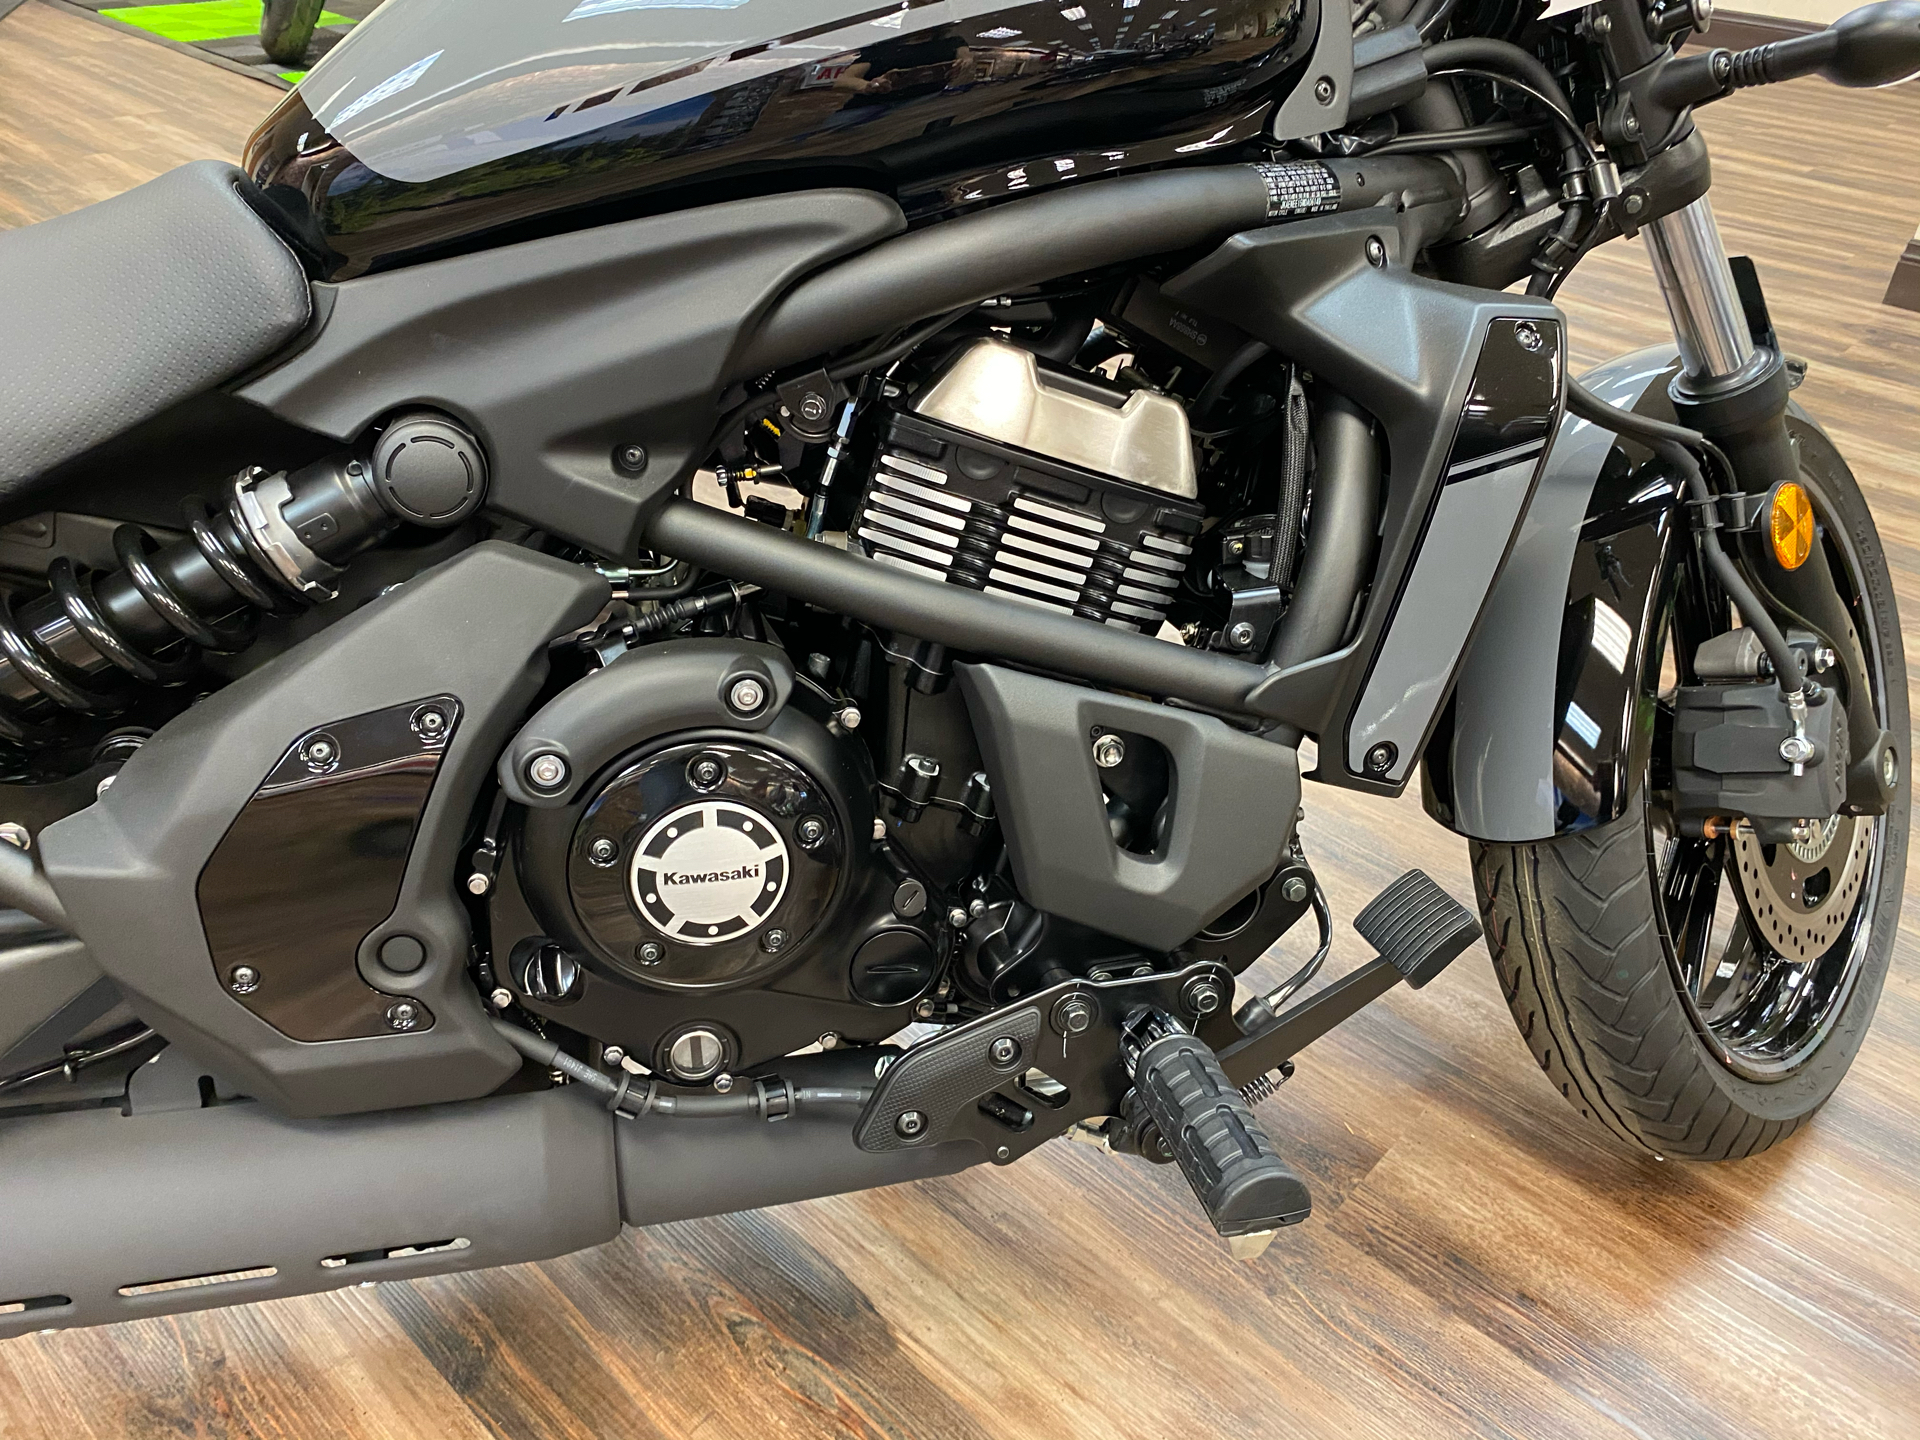 New 2021 Kawasaki Vulcan S ABS Café Motorcycles in NC | Stock A06149 - greatwesternmotorcycles.com